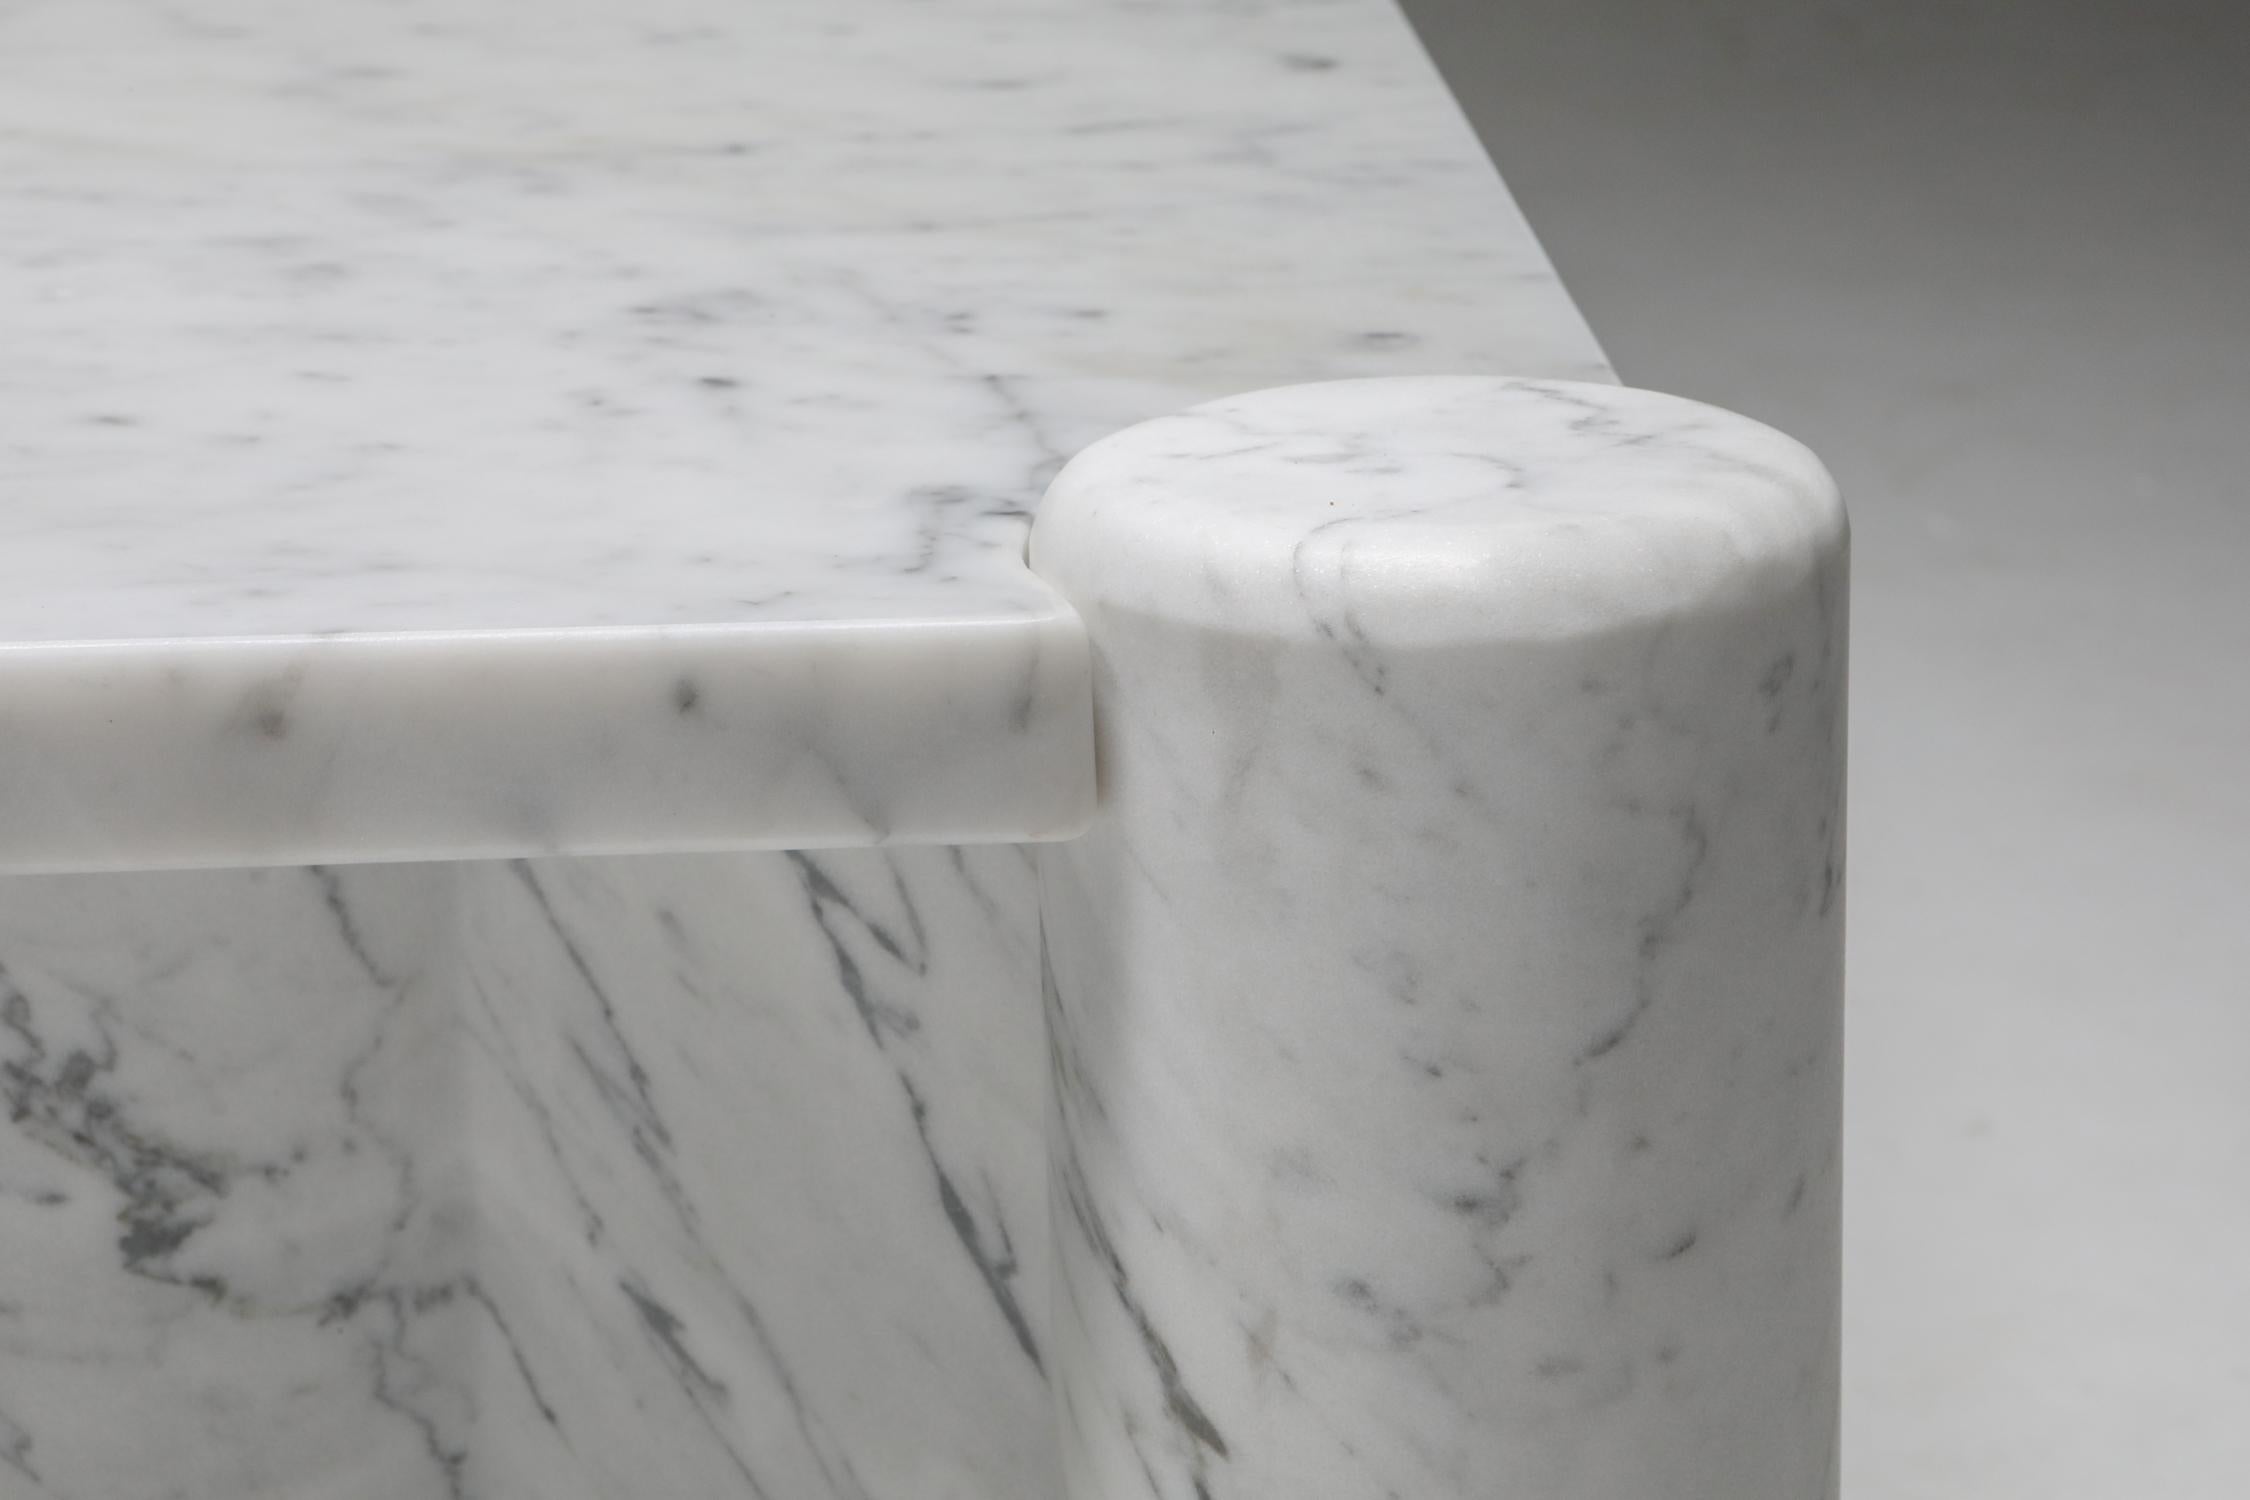 Gae Aulenti 'Jumbo' Coffee Table in Carrara White Marble 3